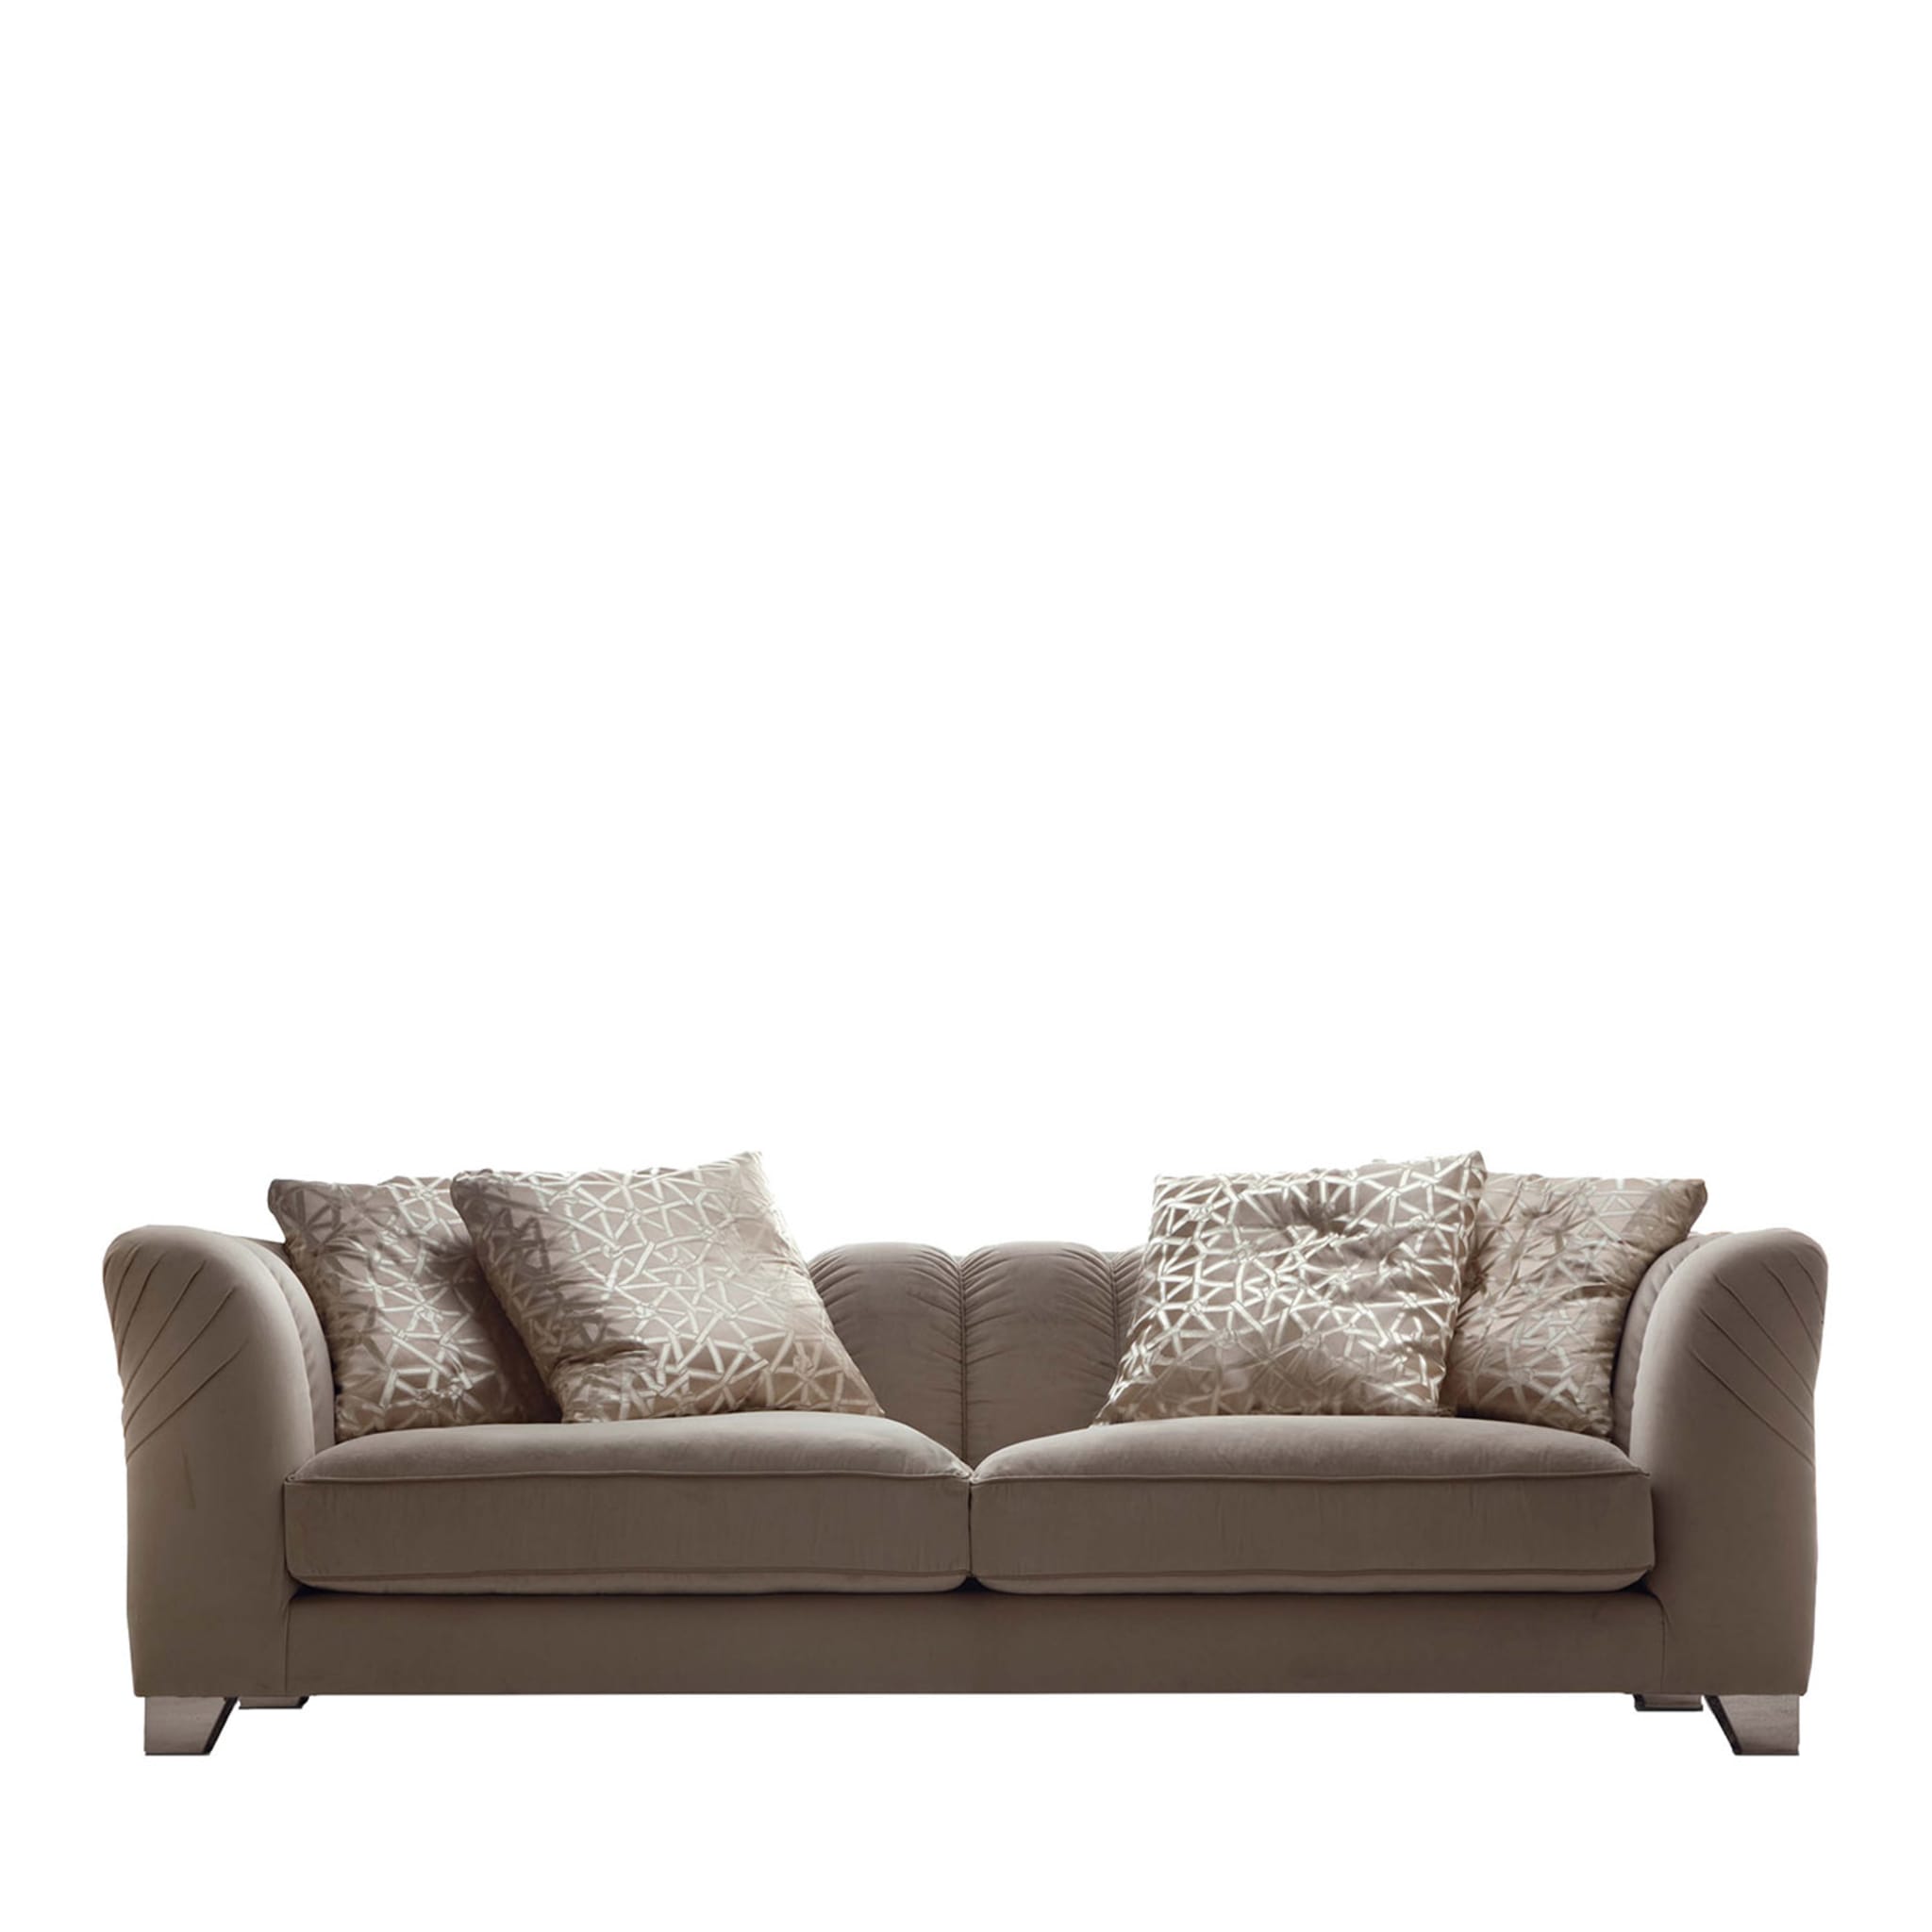 3-Seat Beige fabric Sofa - Main view